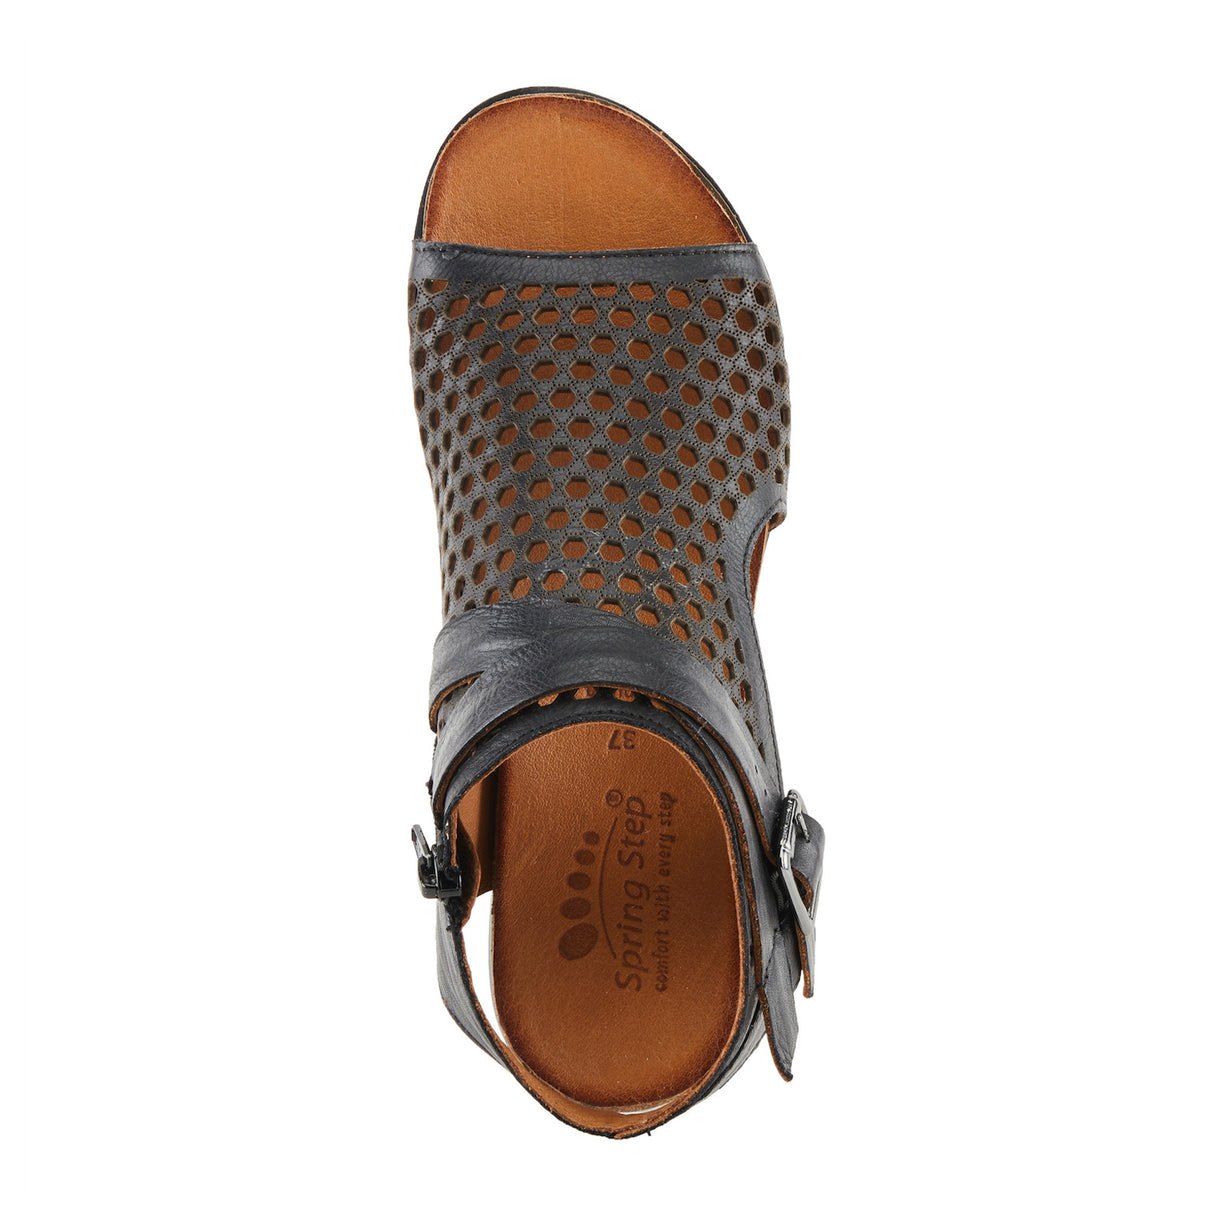 Spring Step Covington (Women) - Black Sandal - Backstrap - The Heel Shoe Fitters